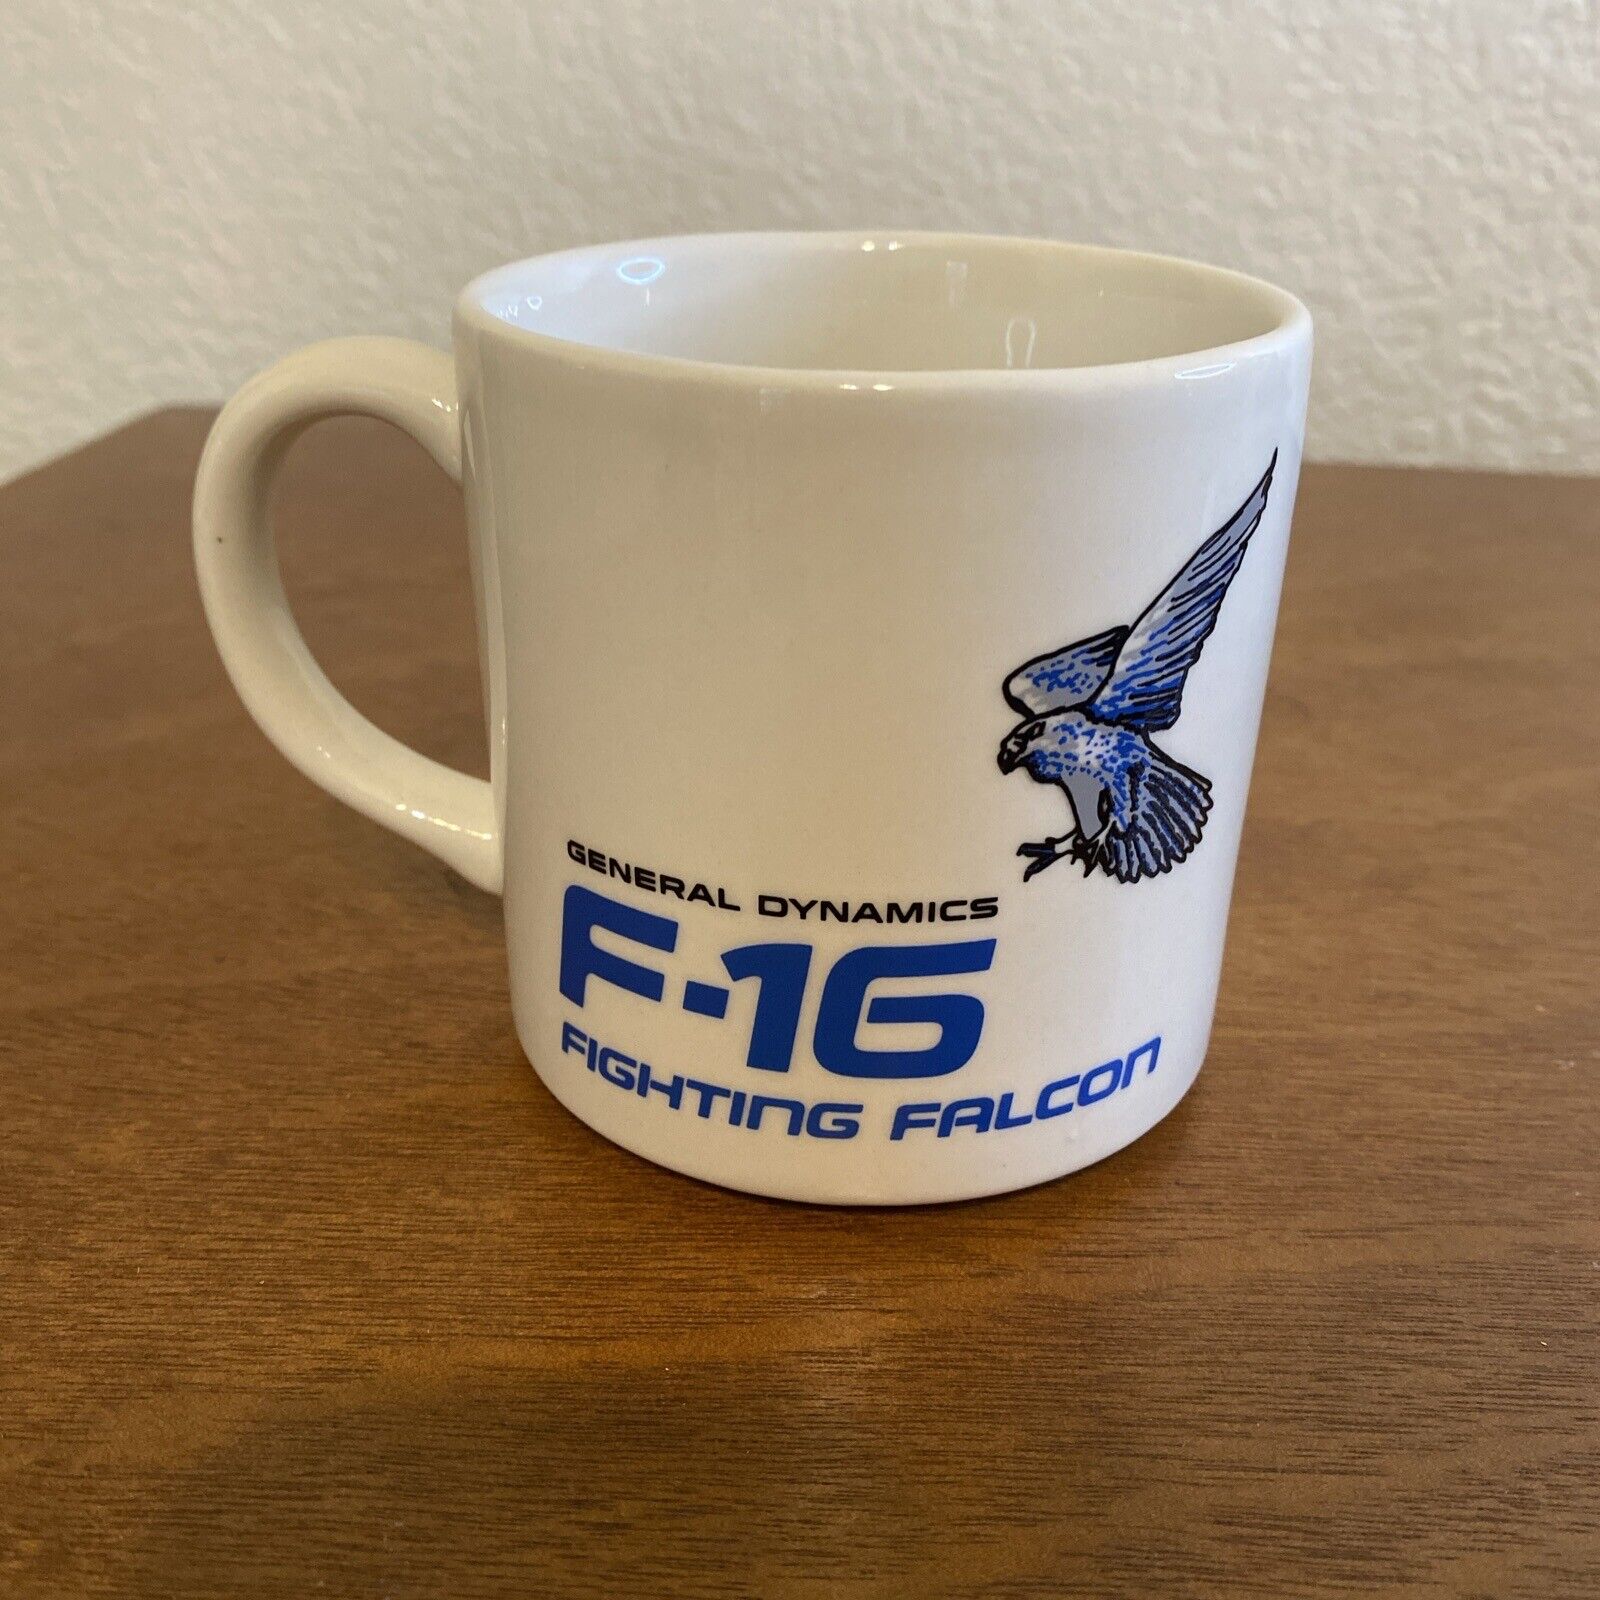 1988 General Dynamics F-16 Fighting Falcon Coffee Cup Mug, New